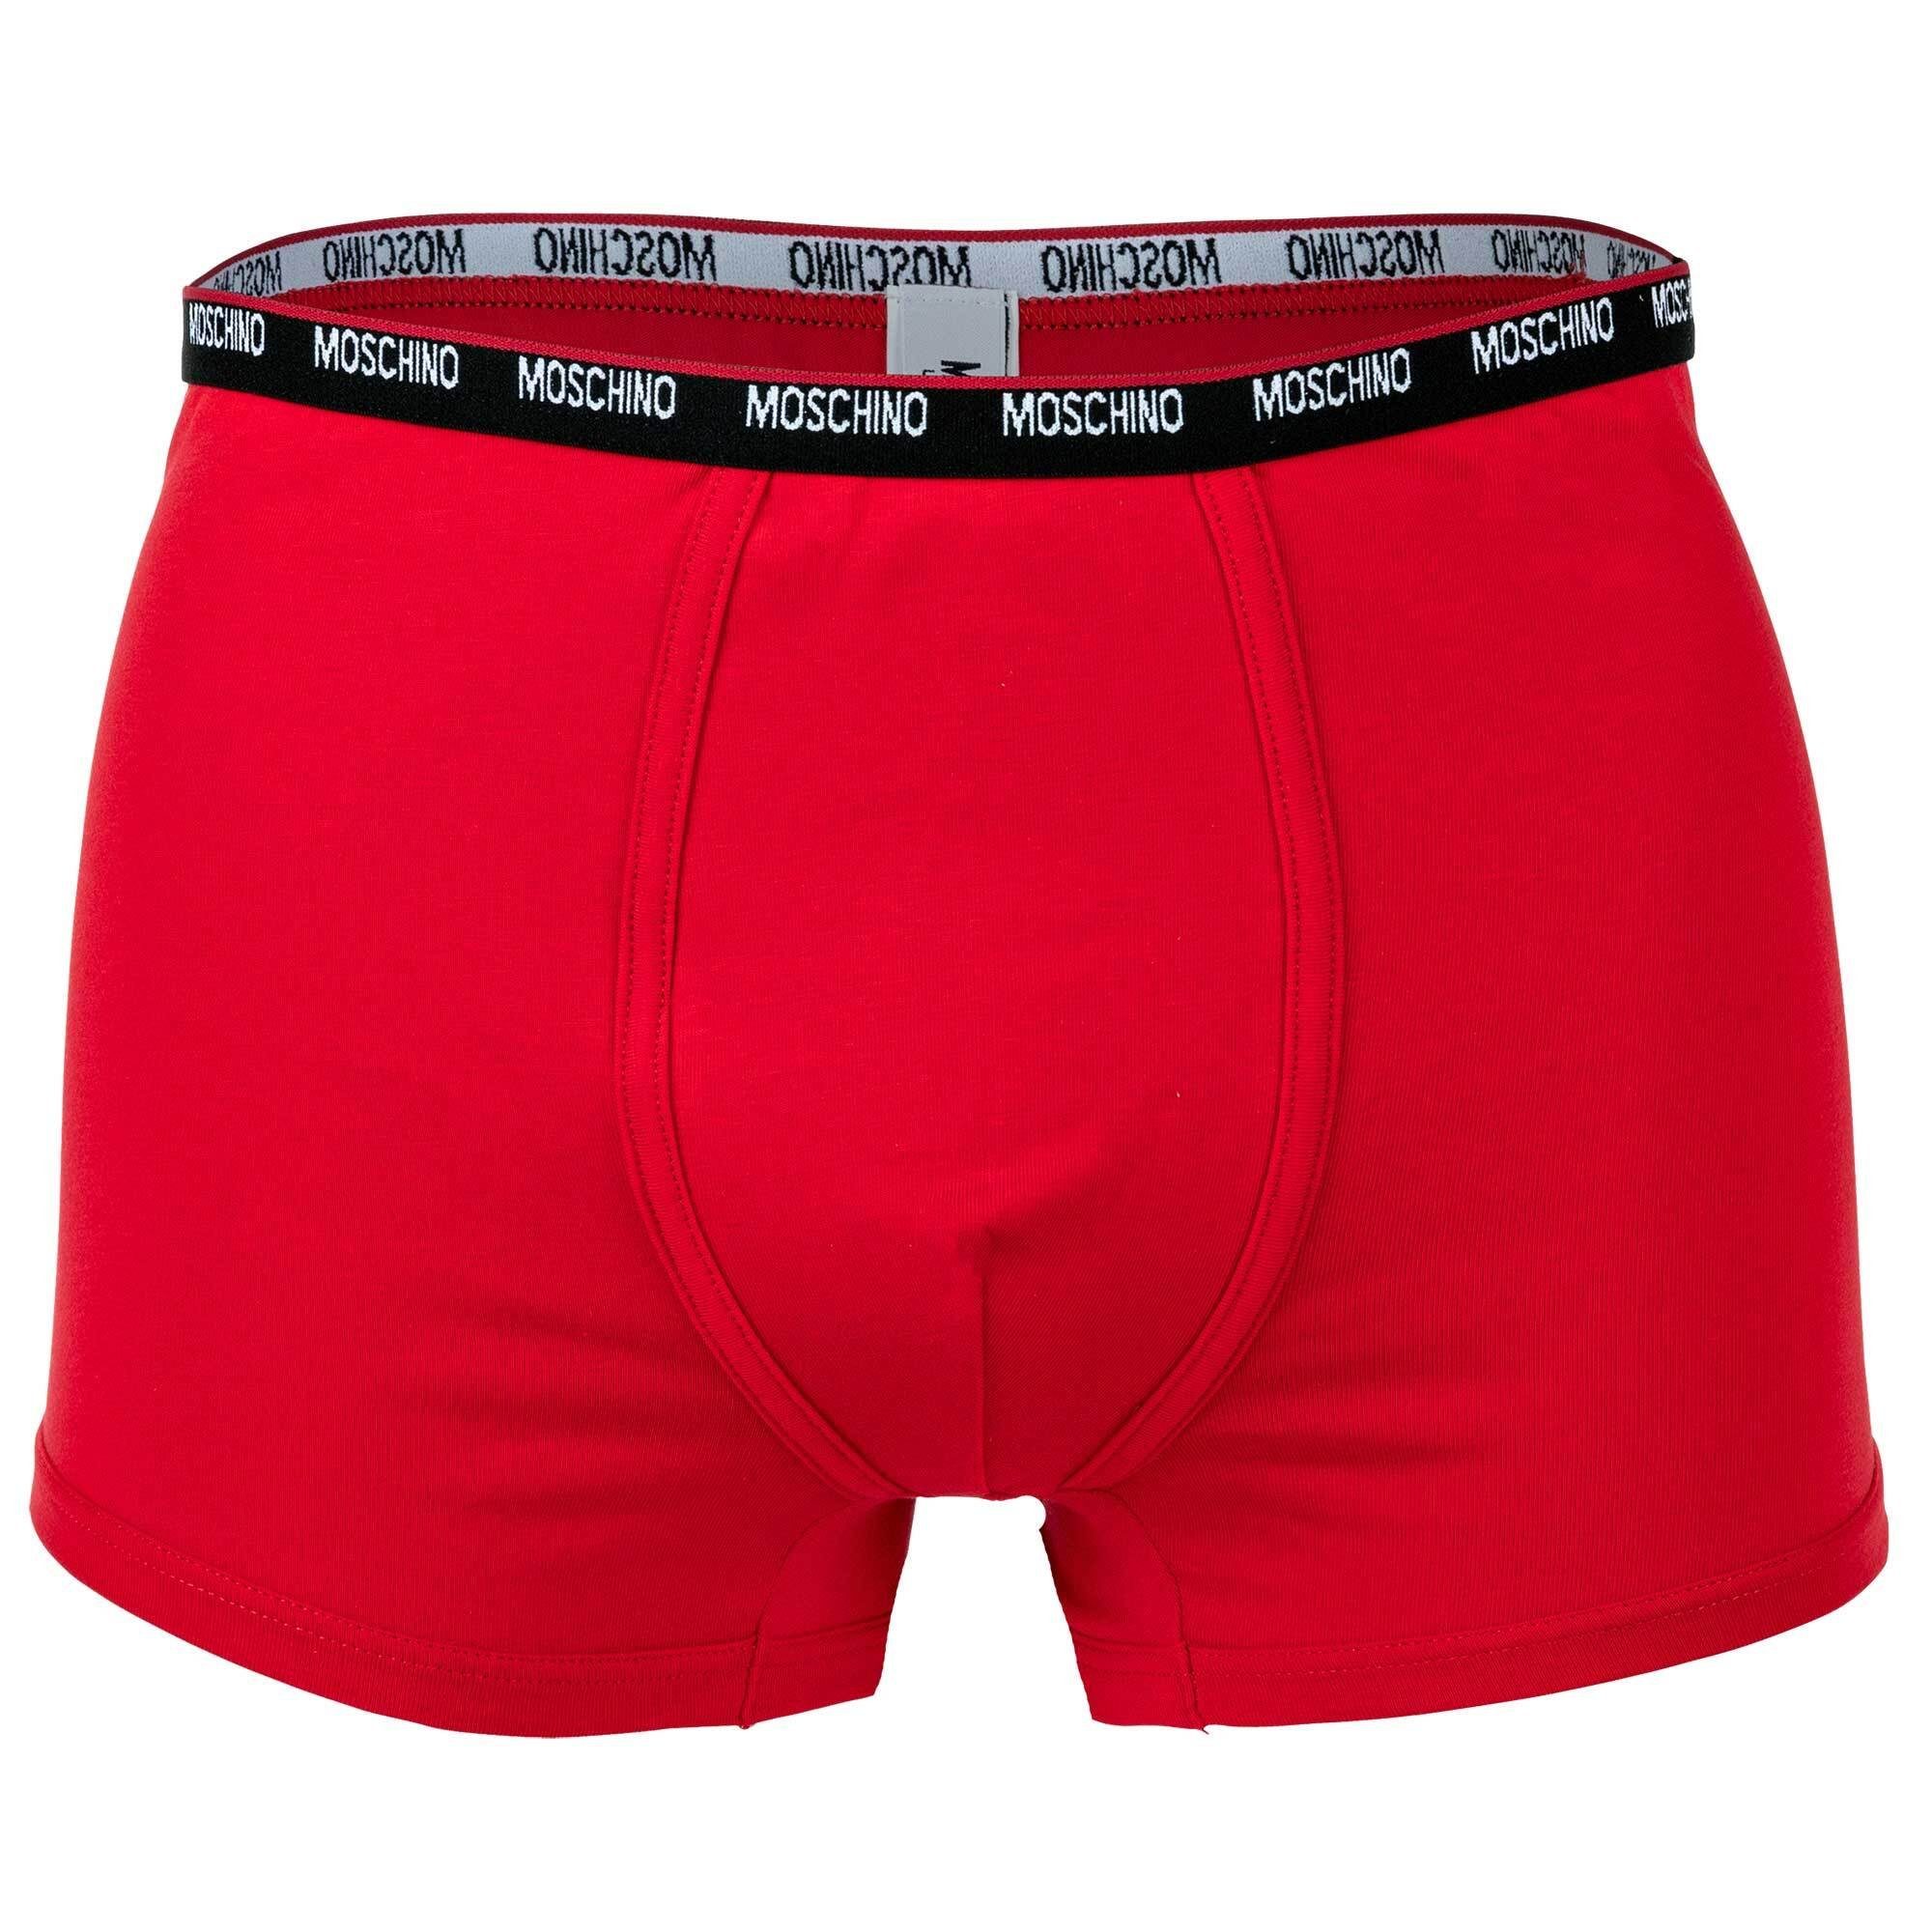 Cotton Herren Moschino - Pack Shorts Trunks, 2er Rot Unterhose, Boxer